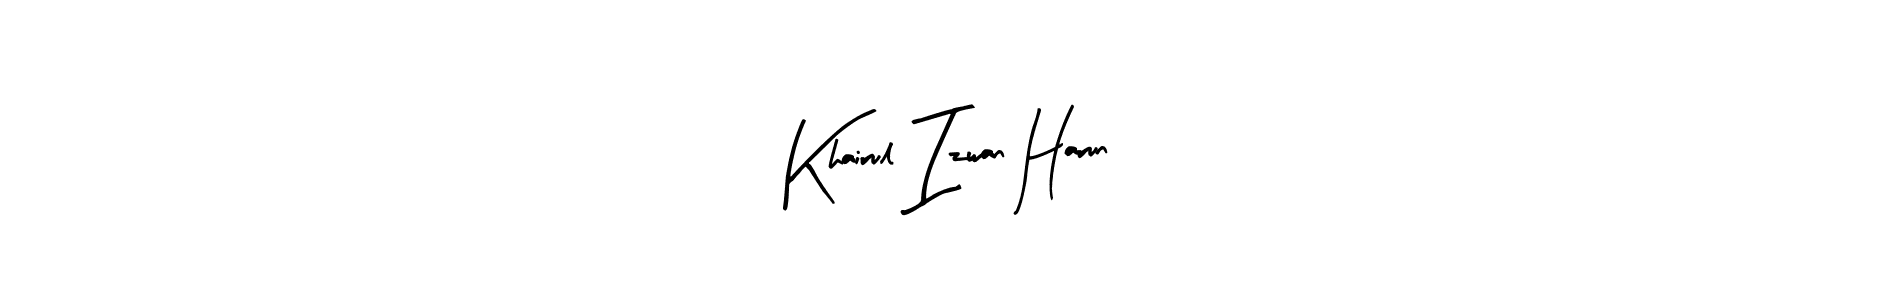 How to Draw Khairul Izwan Harun signature style? Arty Signature is a latest design signature styles for name Khairul Izwan Harun. Khairul Izwan Harun signature style 8 images and pictures png